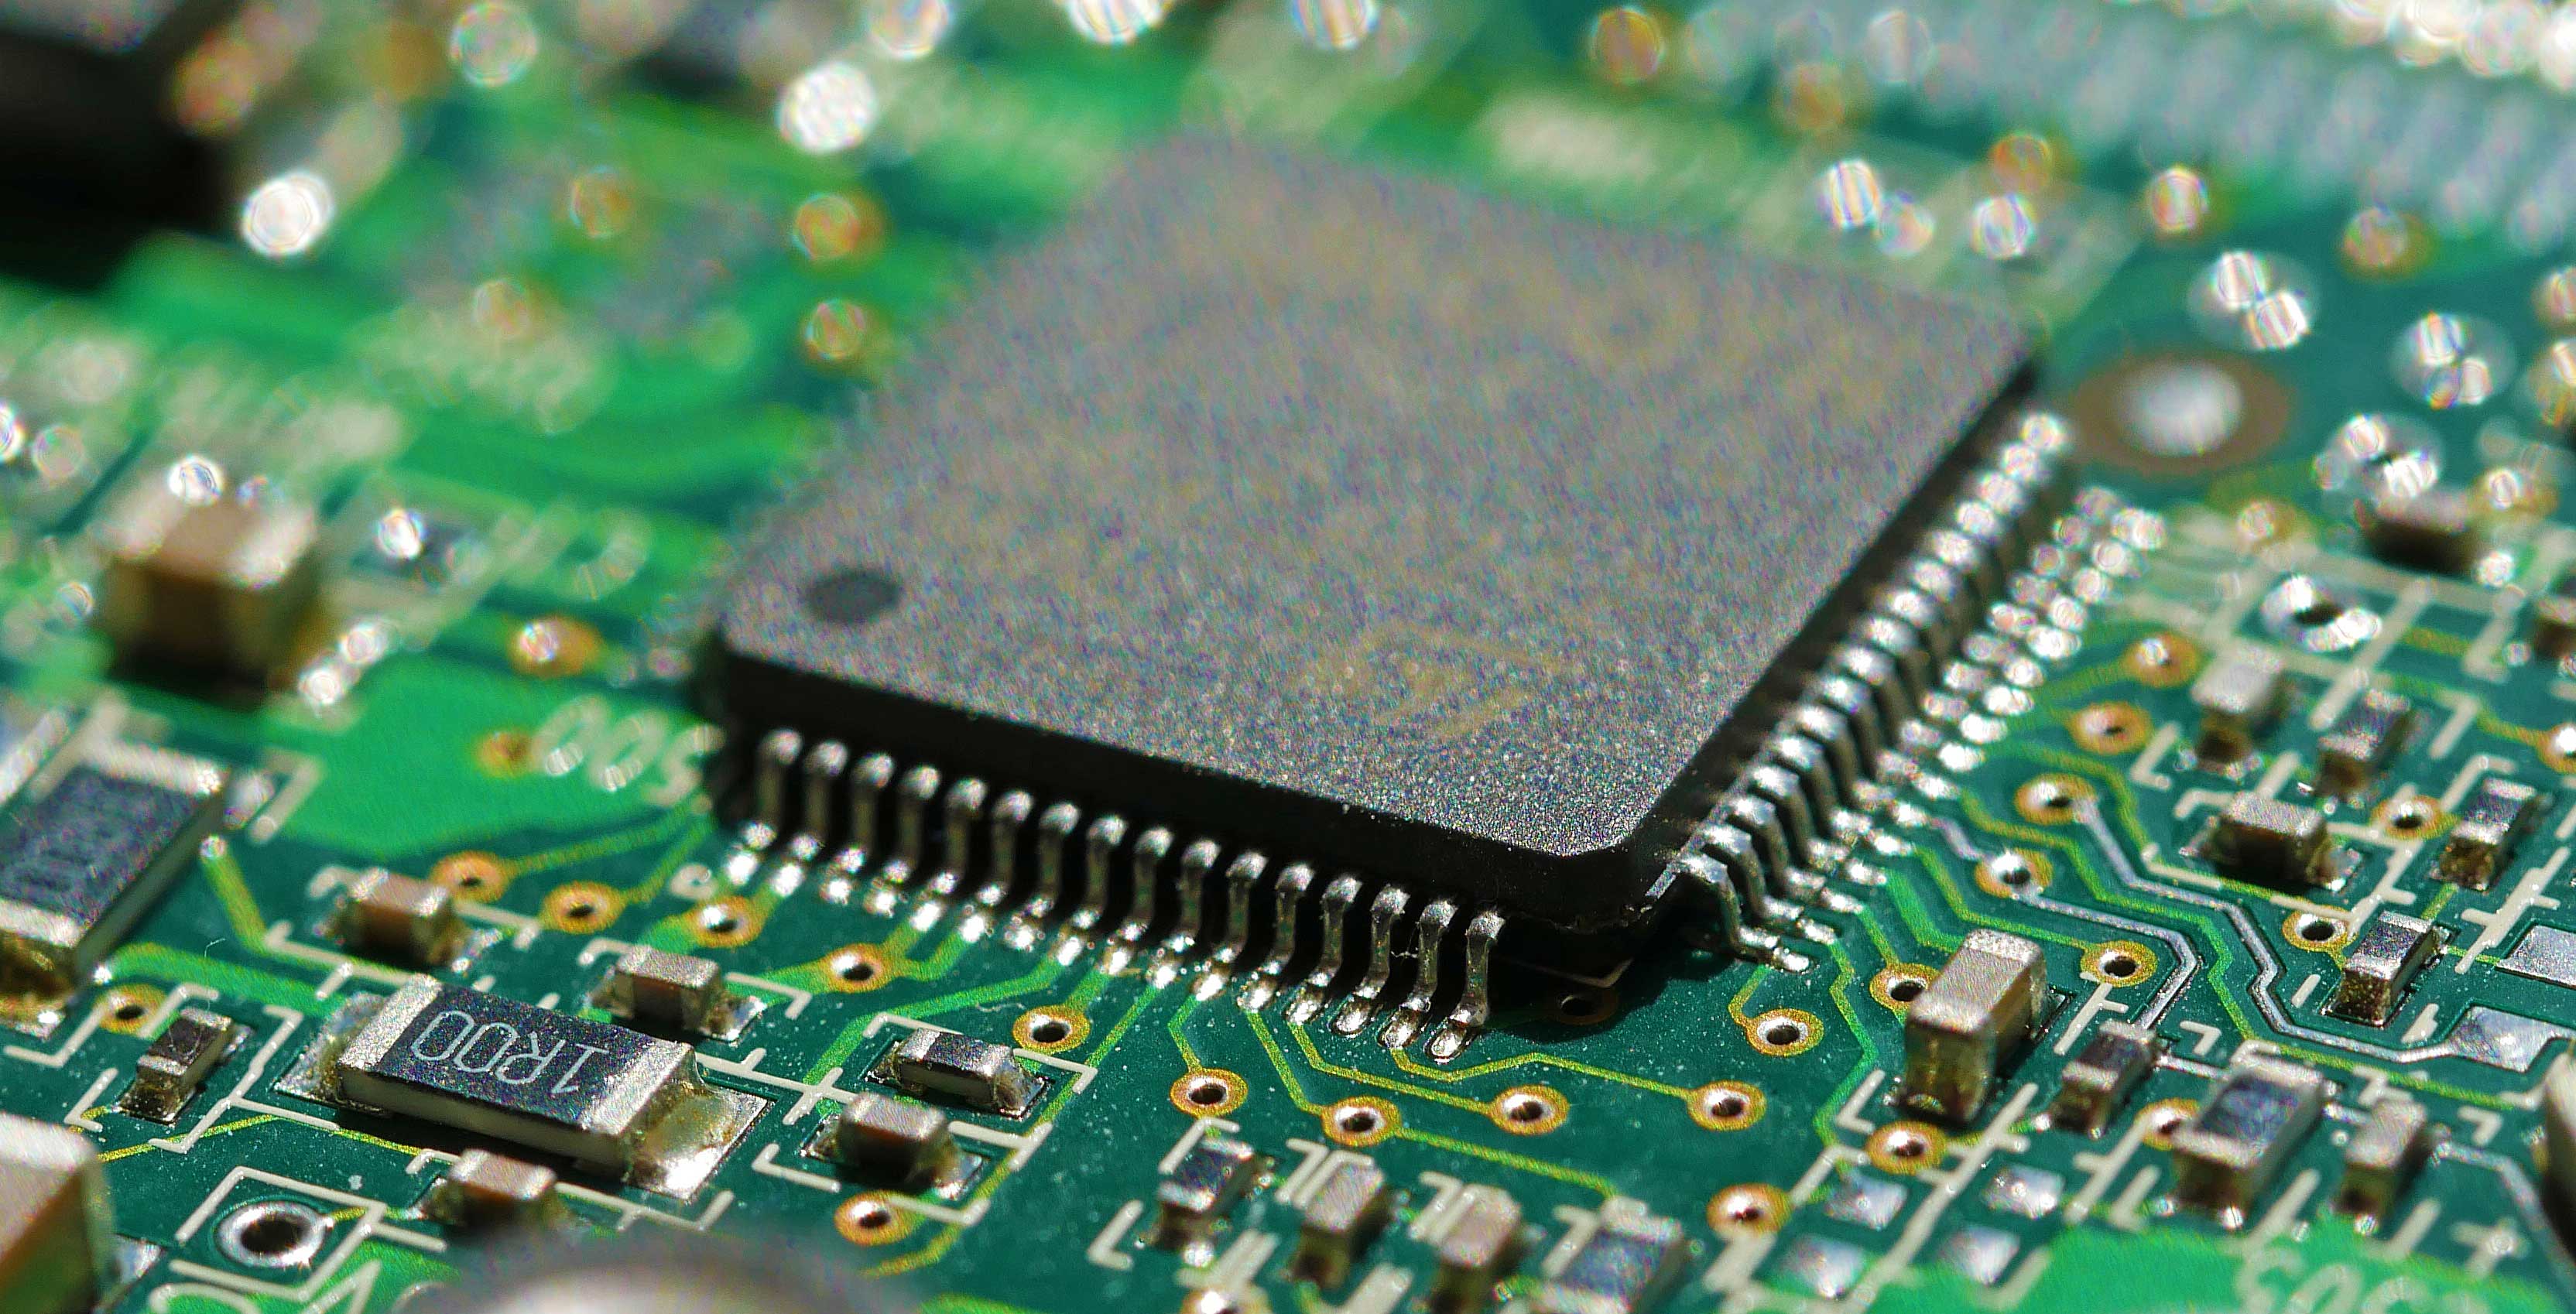 An image of a microchip